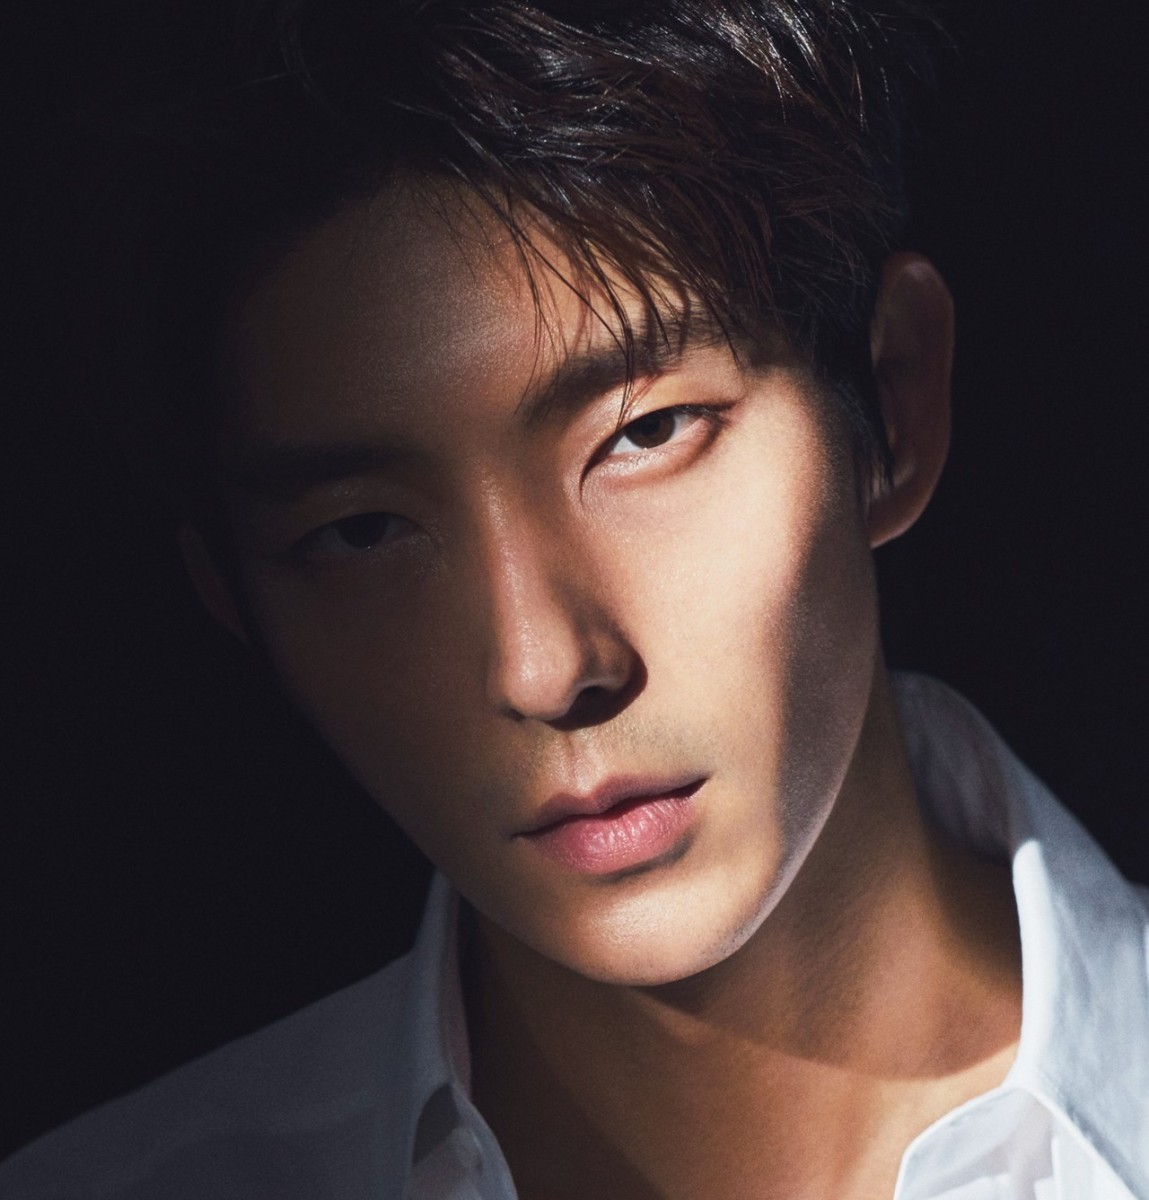 Top 10 Most Popular and Handsome Korean Drama Actors